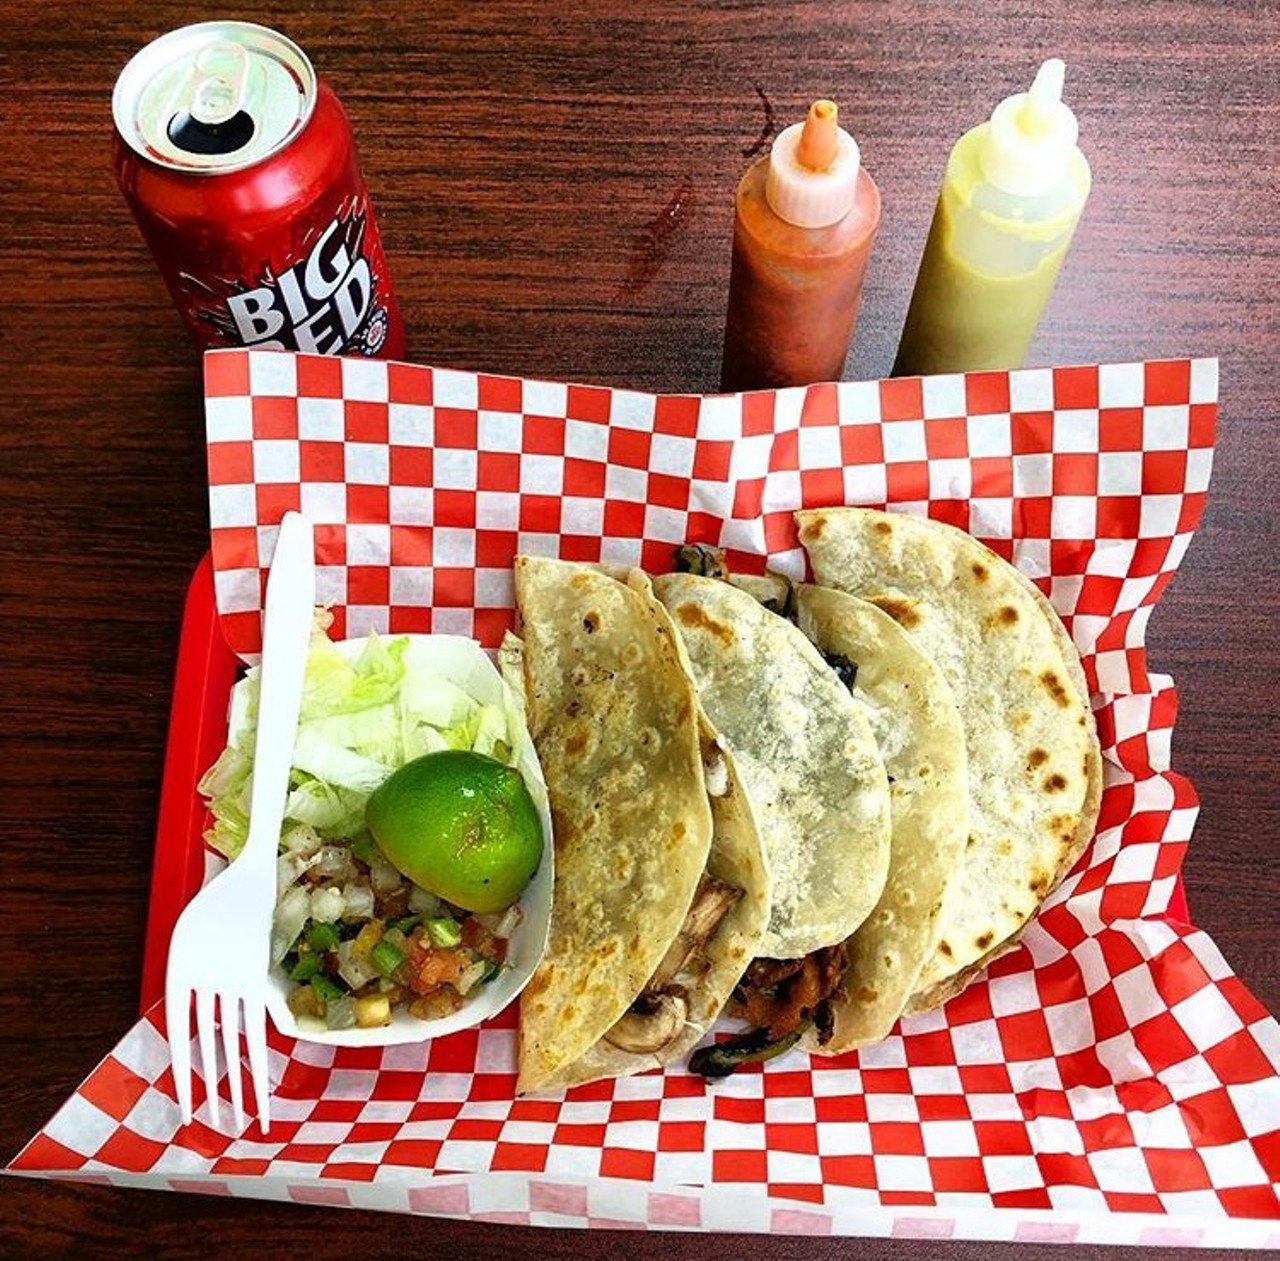 Triple T
1803 Vance Jackson Rd, Ste 302, (210) 255-1793, tttriplet.com
Genuine Mexican cuisine up to 44% off? We’re there.
Photo via Instagram / dianadaveli